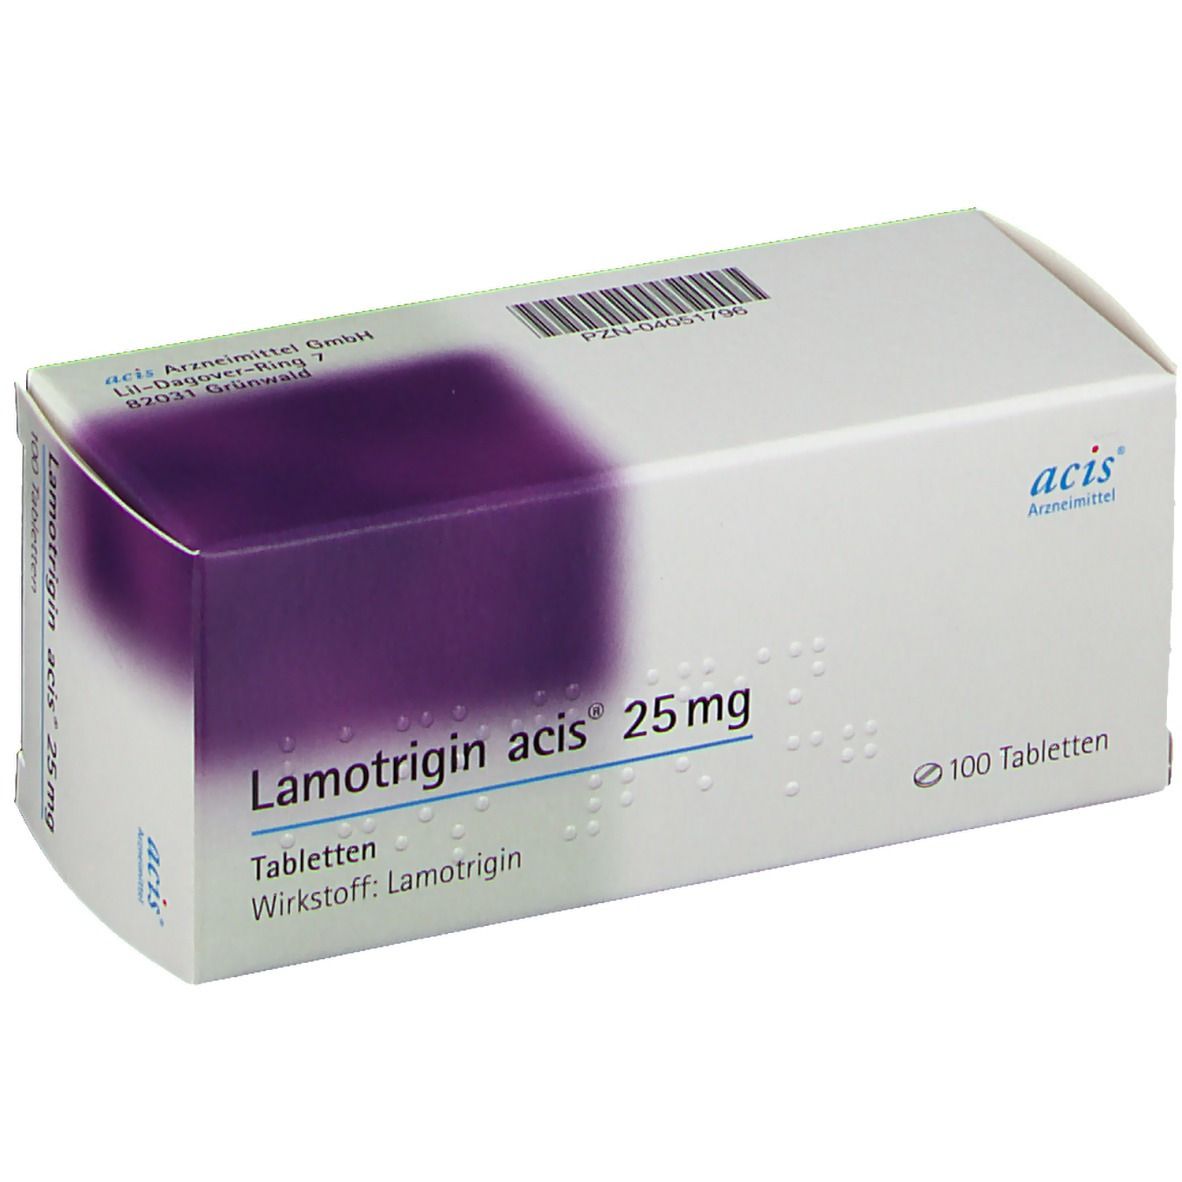 Lamotrigin acis® 25Mg